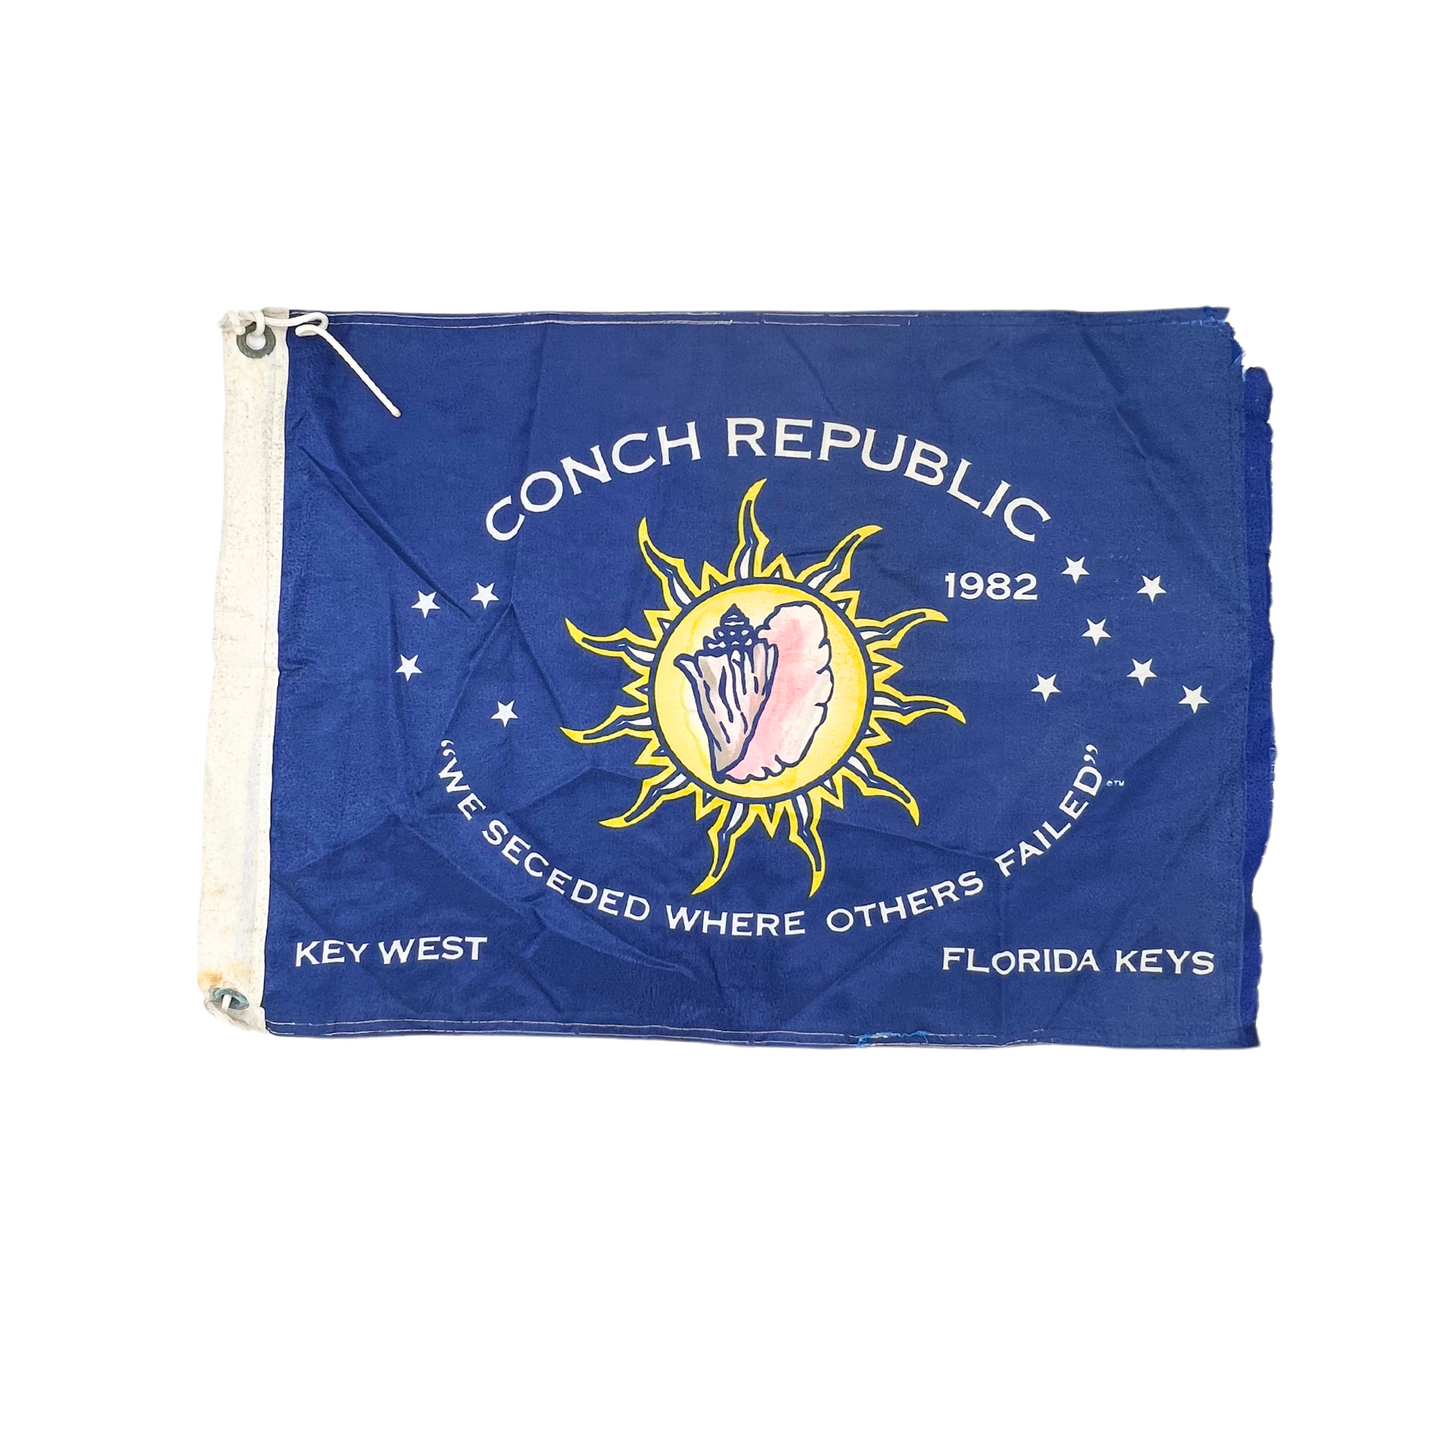 1982 Conch Republic flag